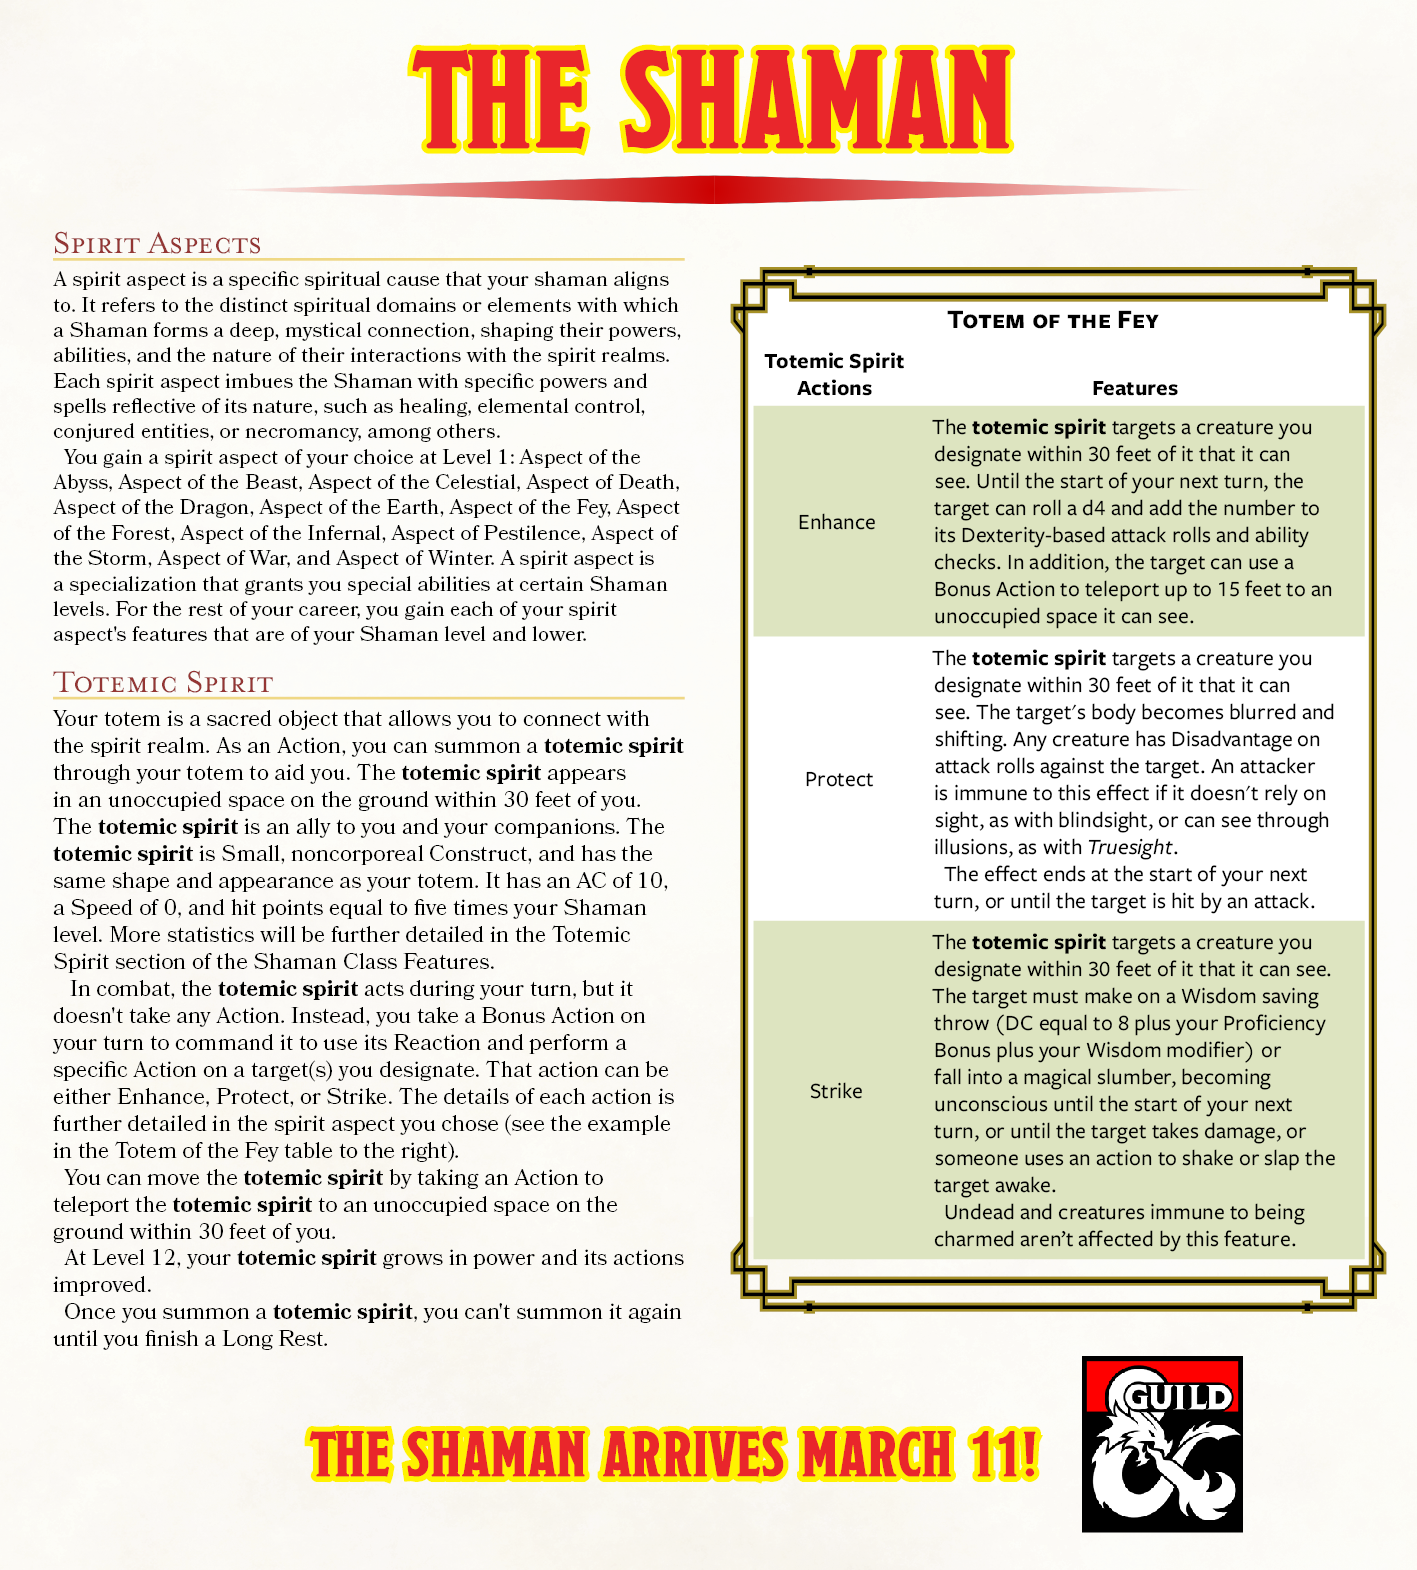 Preview Shaman V3.00.png